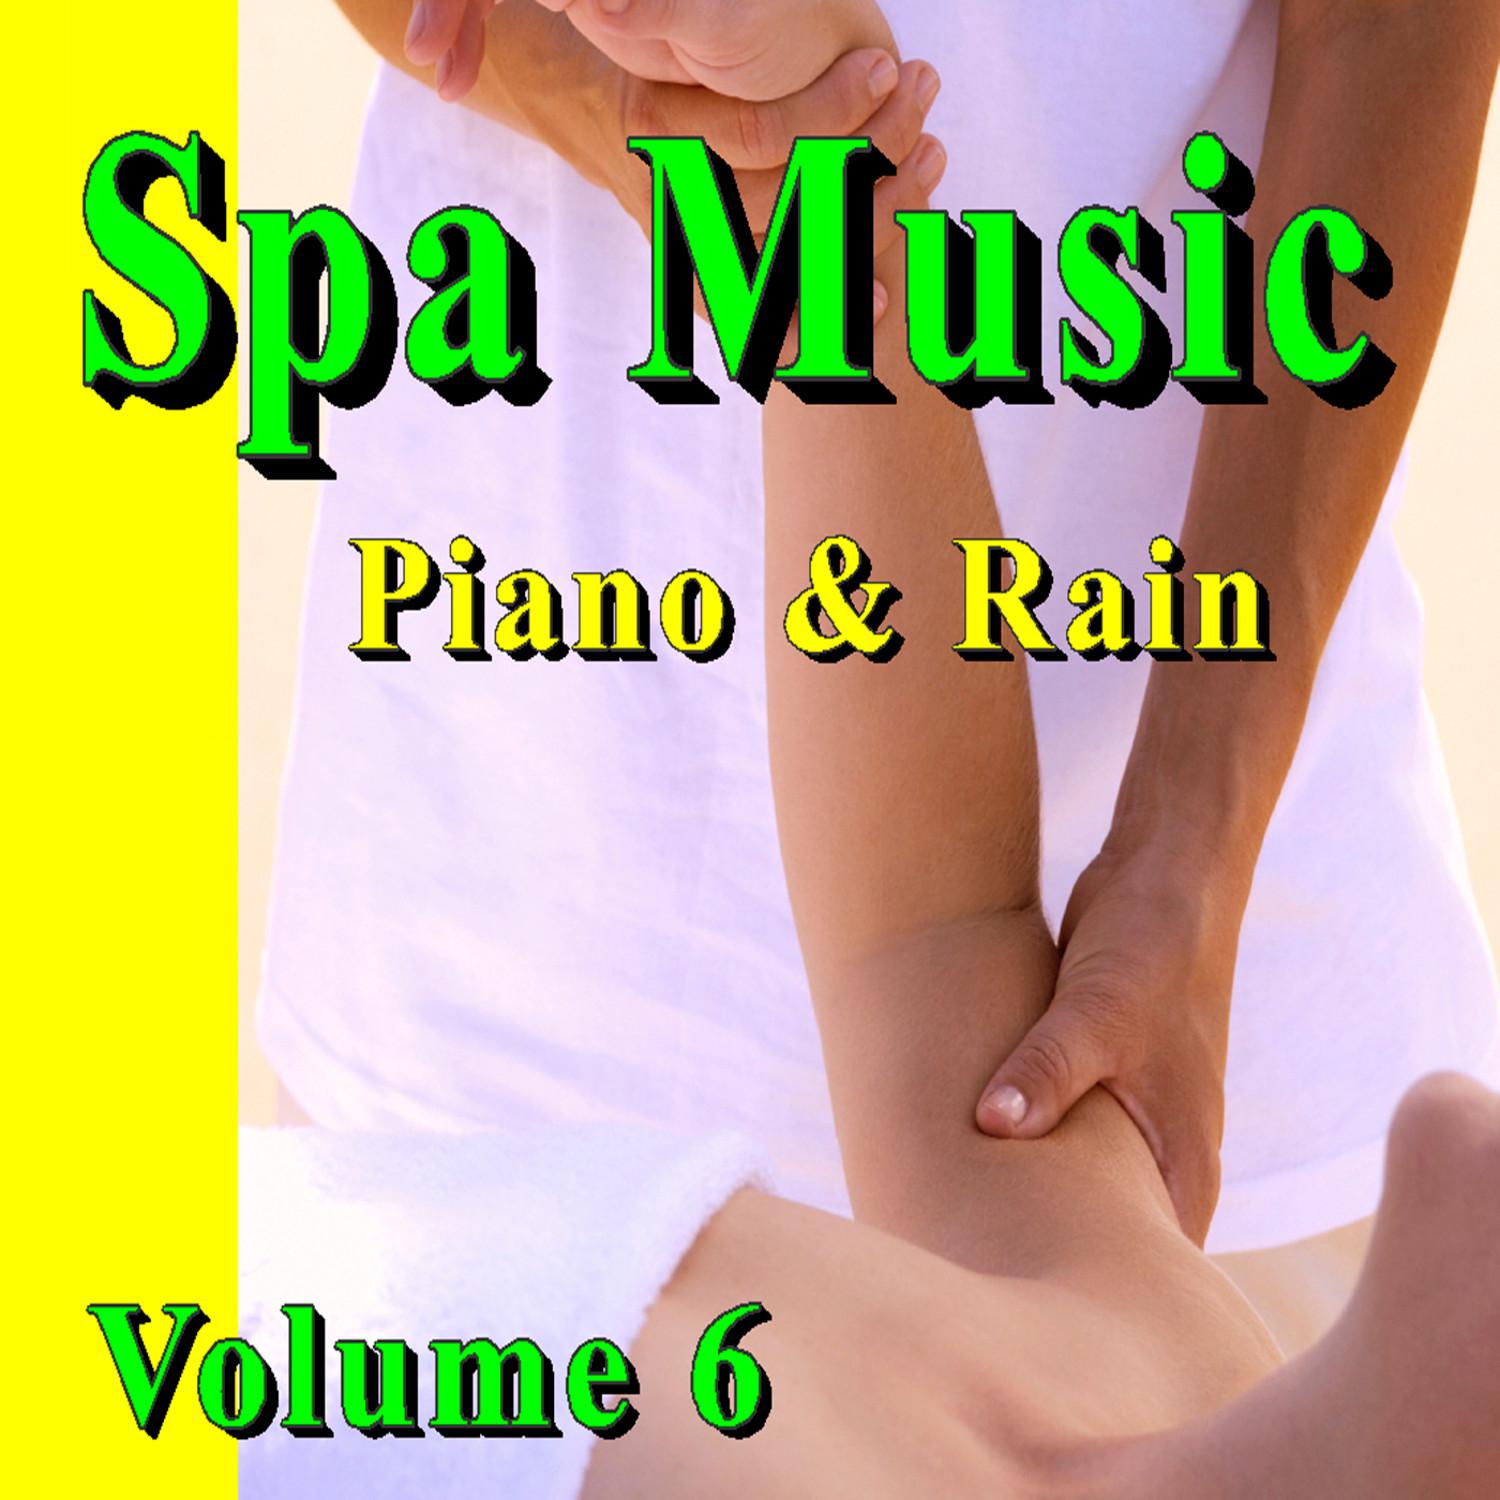 Spa Music (Piano & Rain) Volume 6